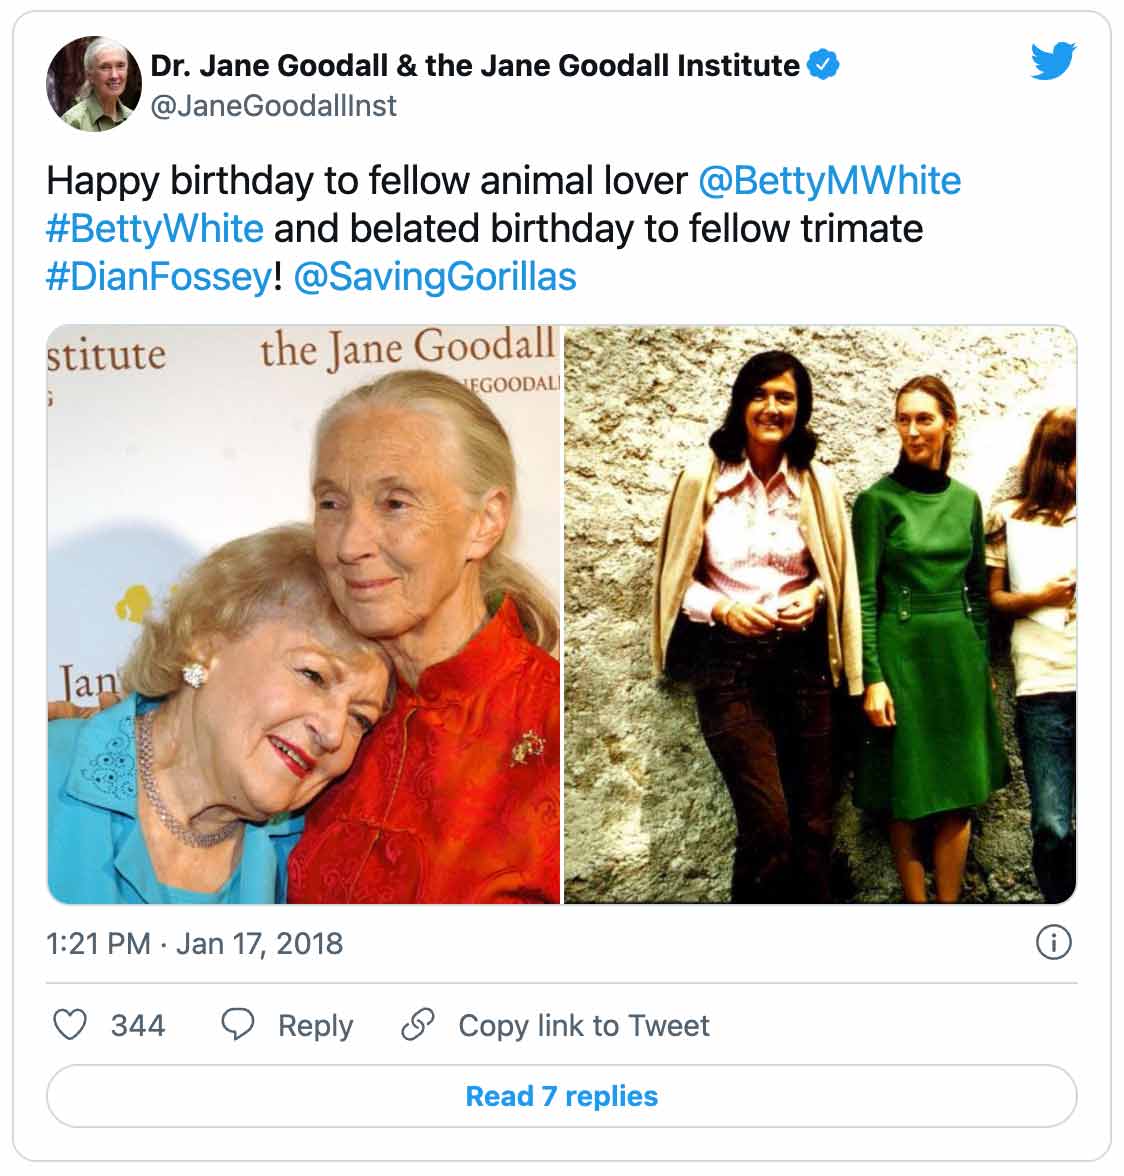 Tweet with images: Dr. Jane Goodall & the Jane Goodall Institute @JaneGoodallInst Happy birthday to fellow animal lover  @BettyMWhite  #BettyWhite and belated birthday to fellow trimate #DianFossey!  @SavingGorillas